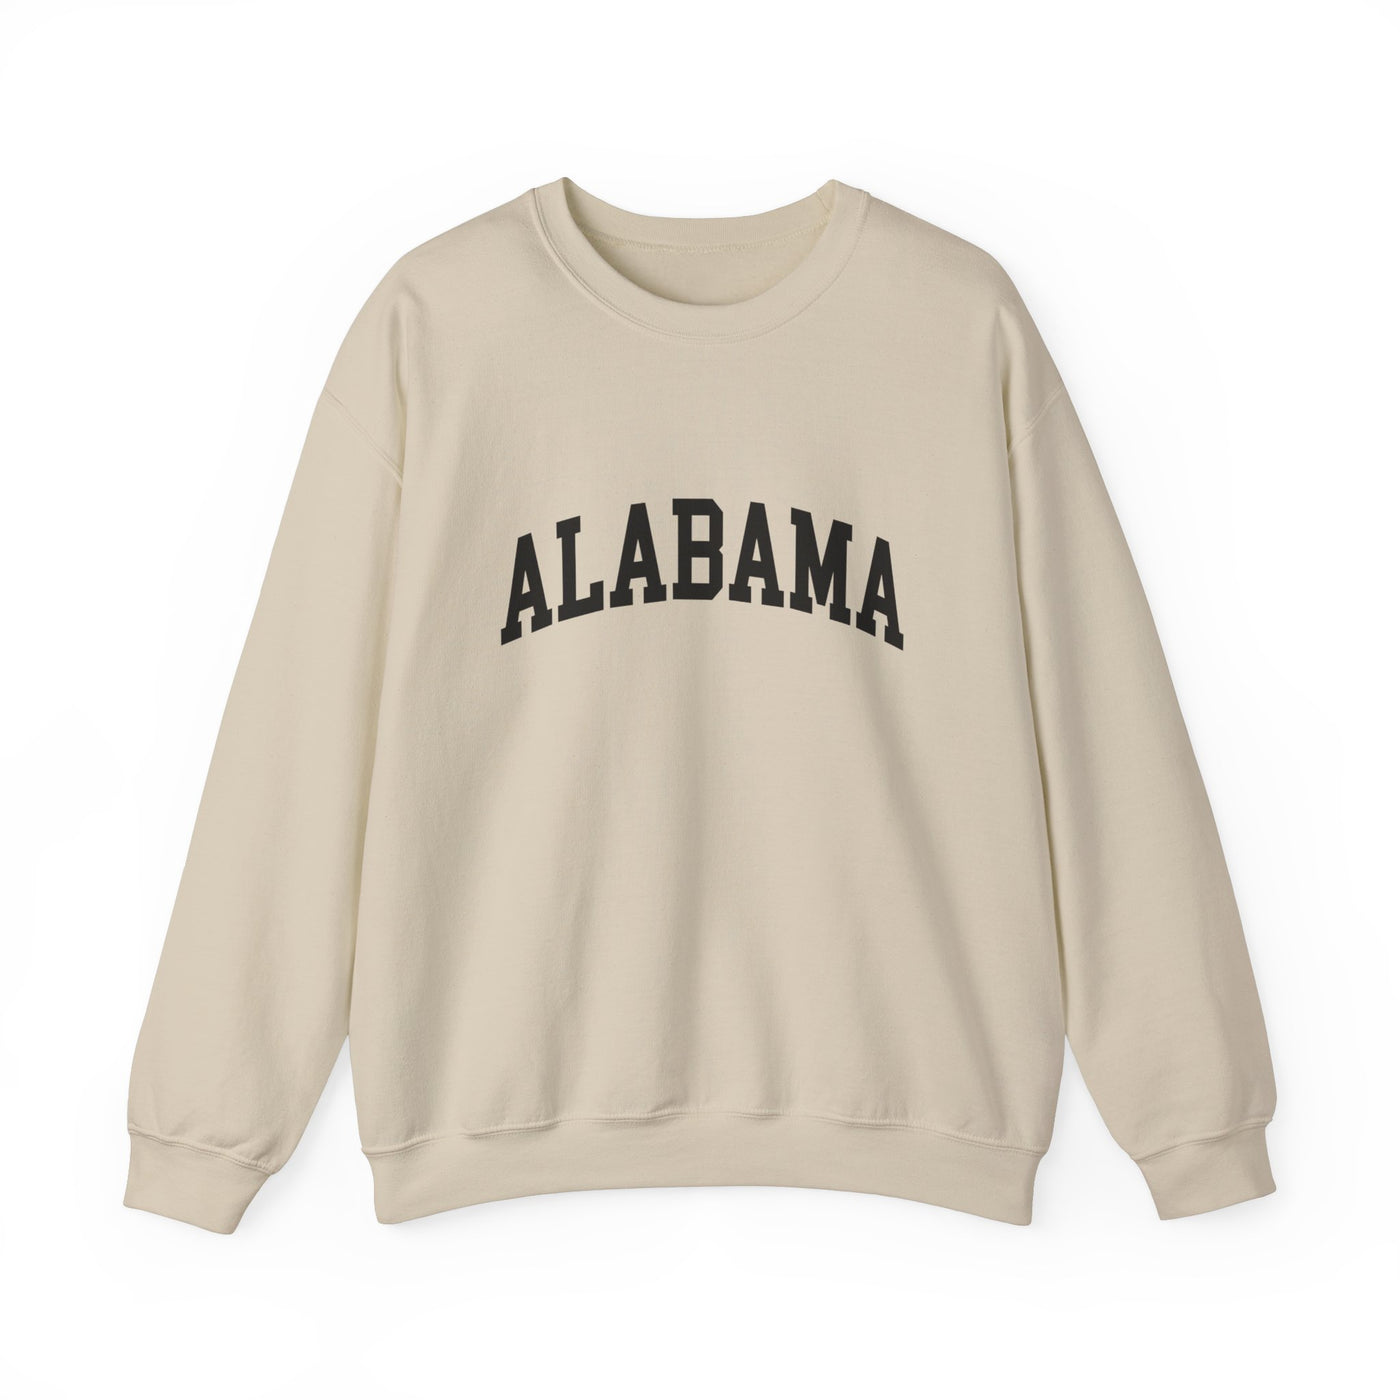 Alabama Collegiate Crewneck Sweatshirt